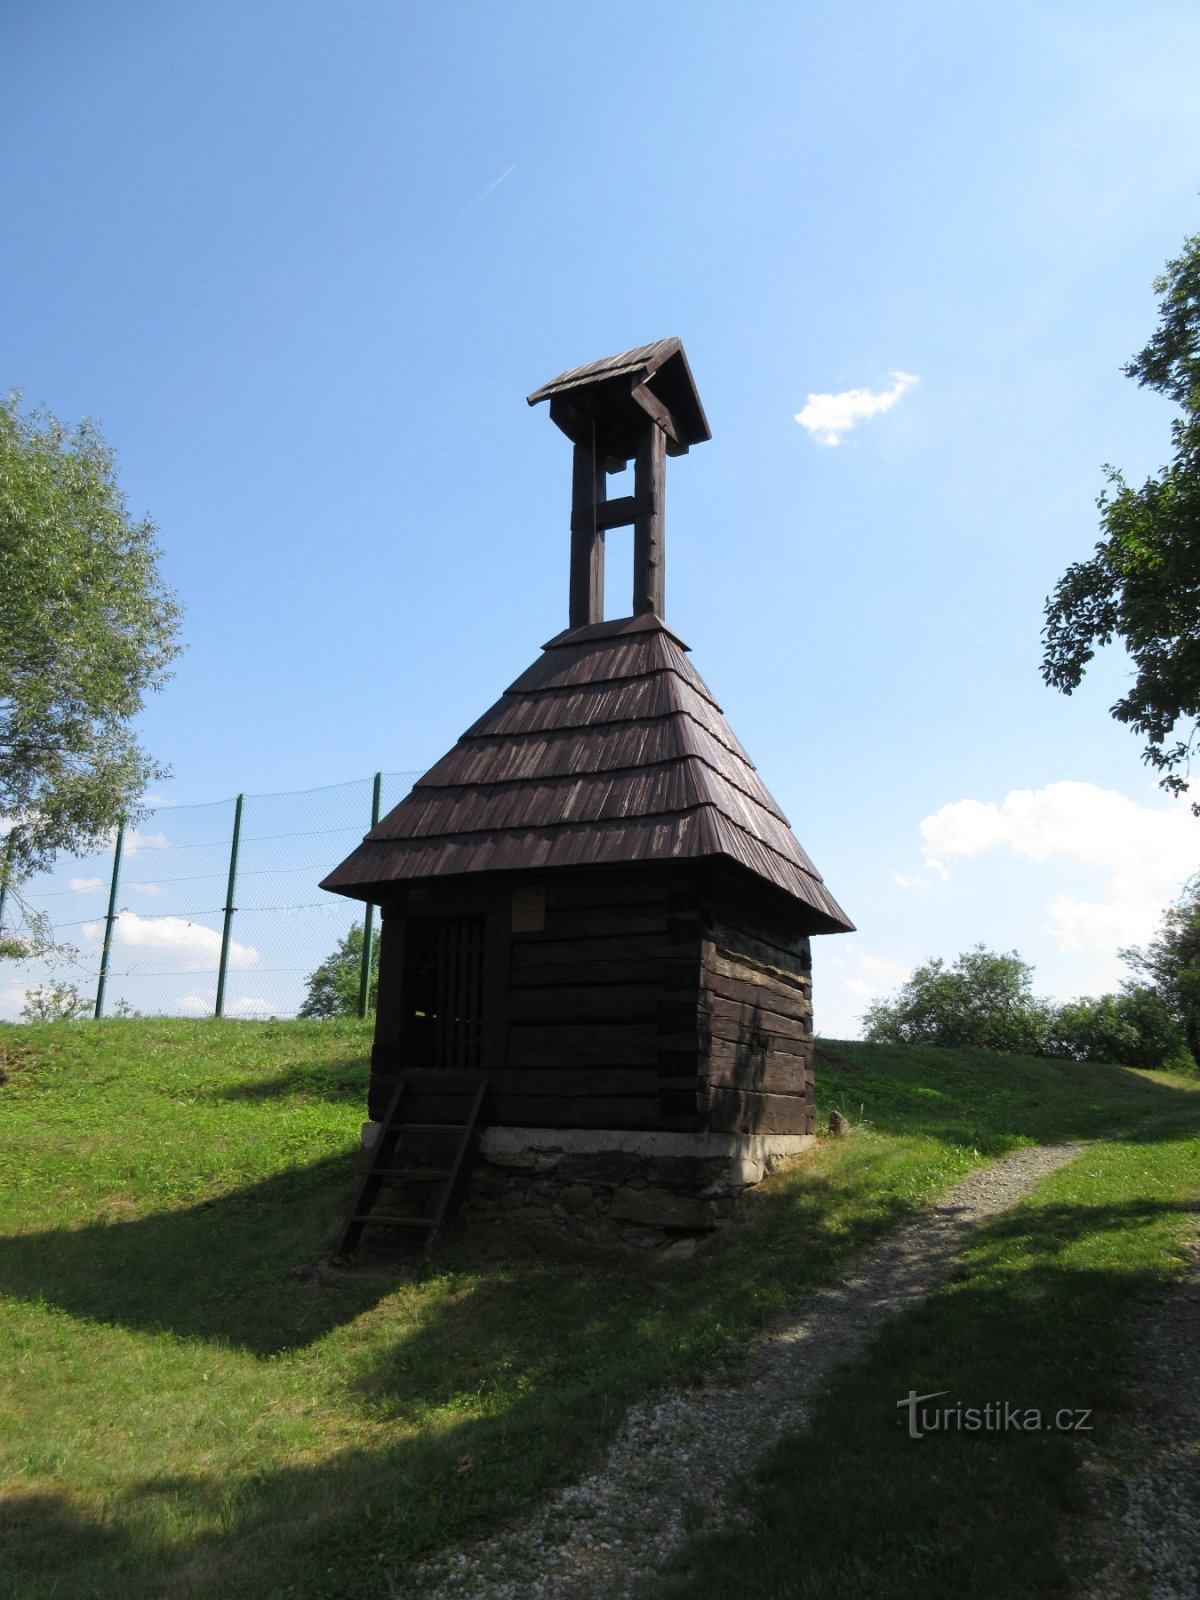 Borek - Kozojedy (Pilsen-north) とそこの木造家屋